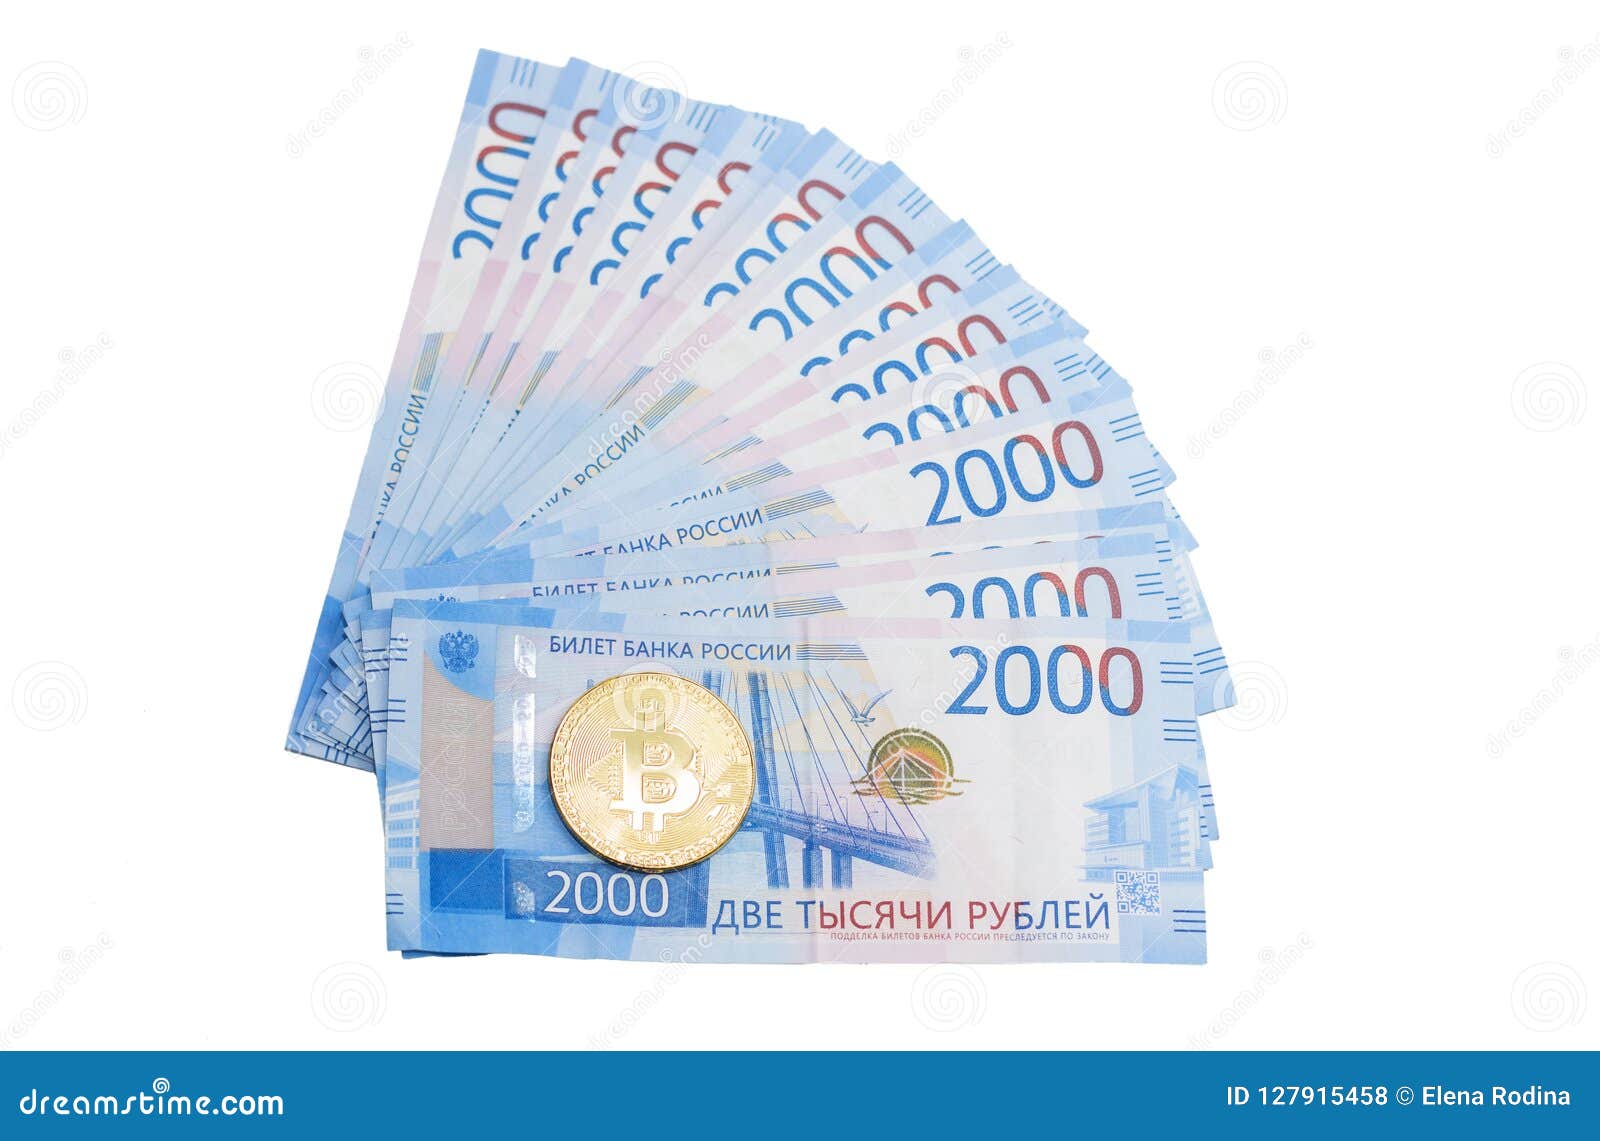 2000 рублей в биткоине vkvzlomer v 1.0 отзывы